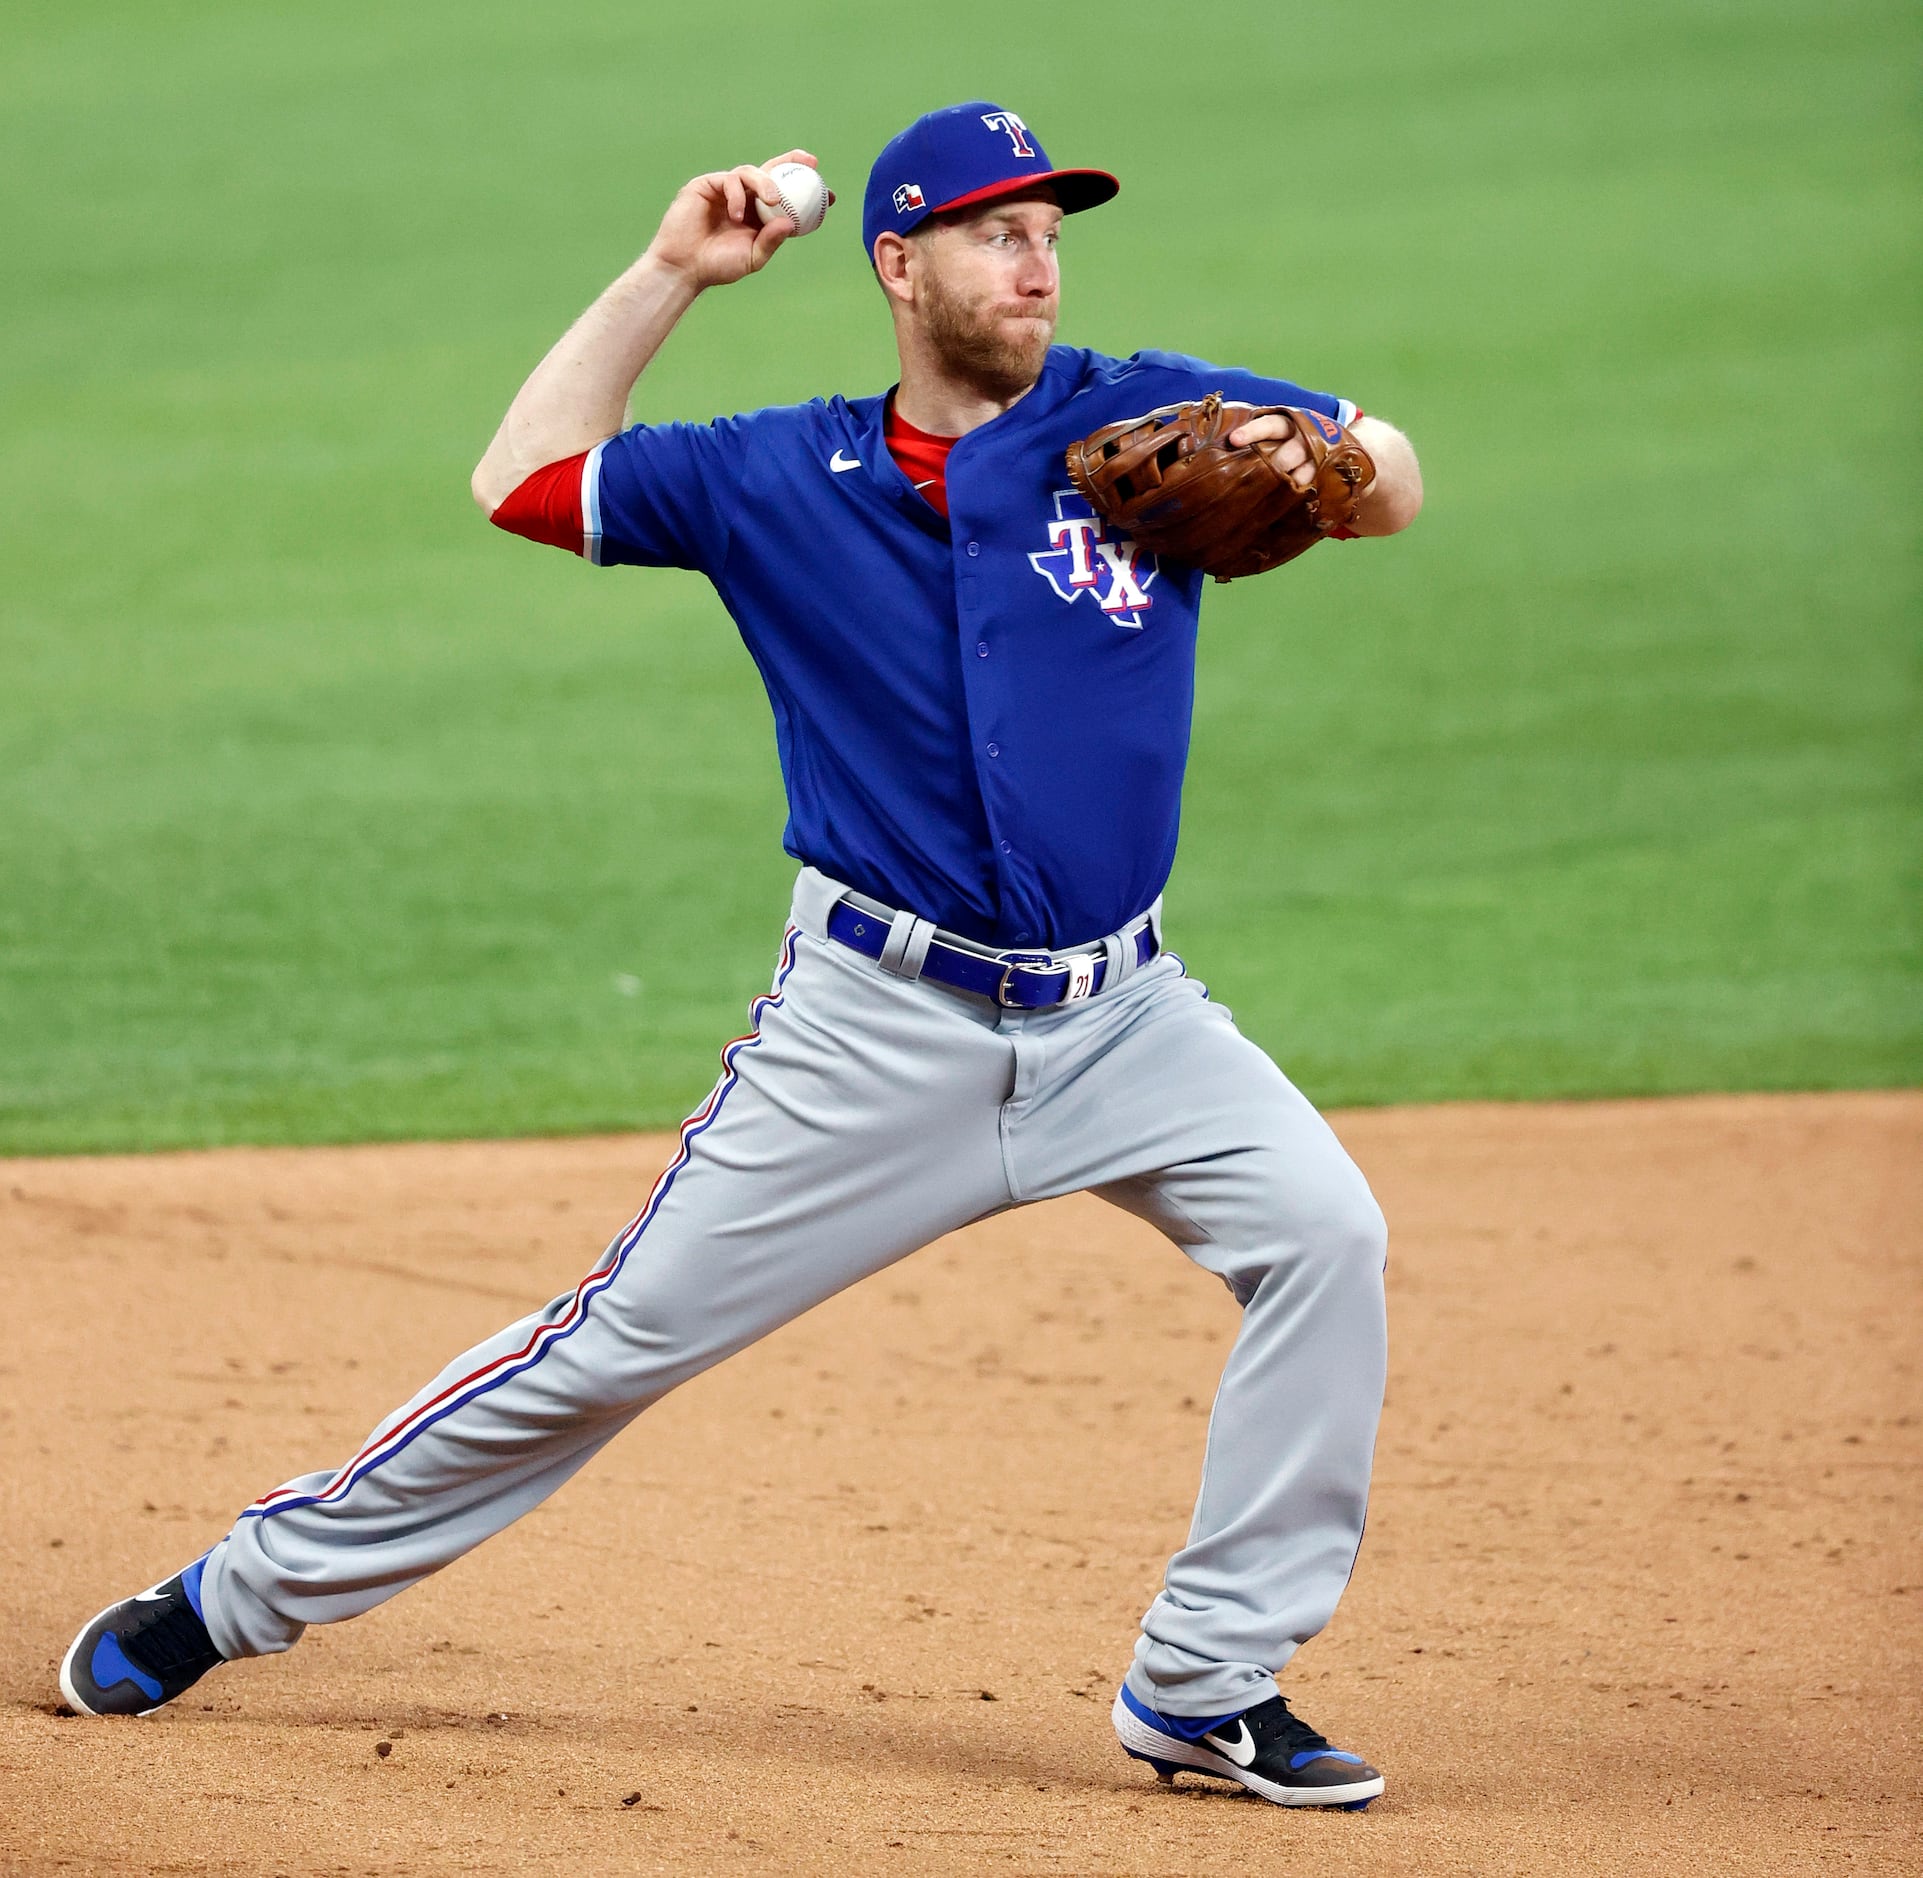 Texas Rangers third baseman Todd Frazier fields an infield ball and makes the play at first...